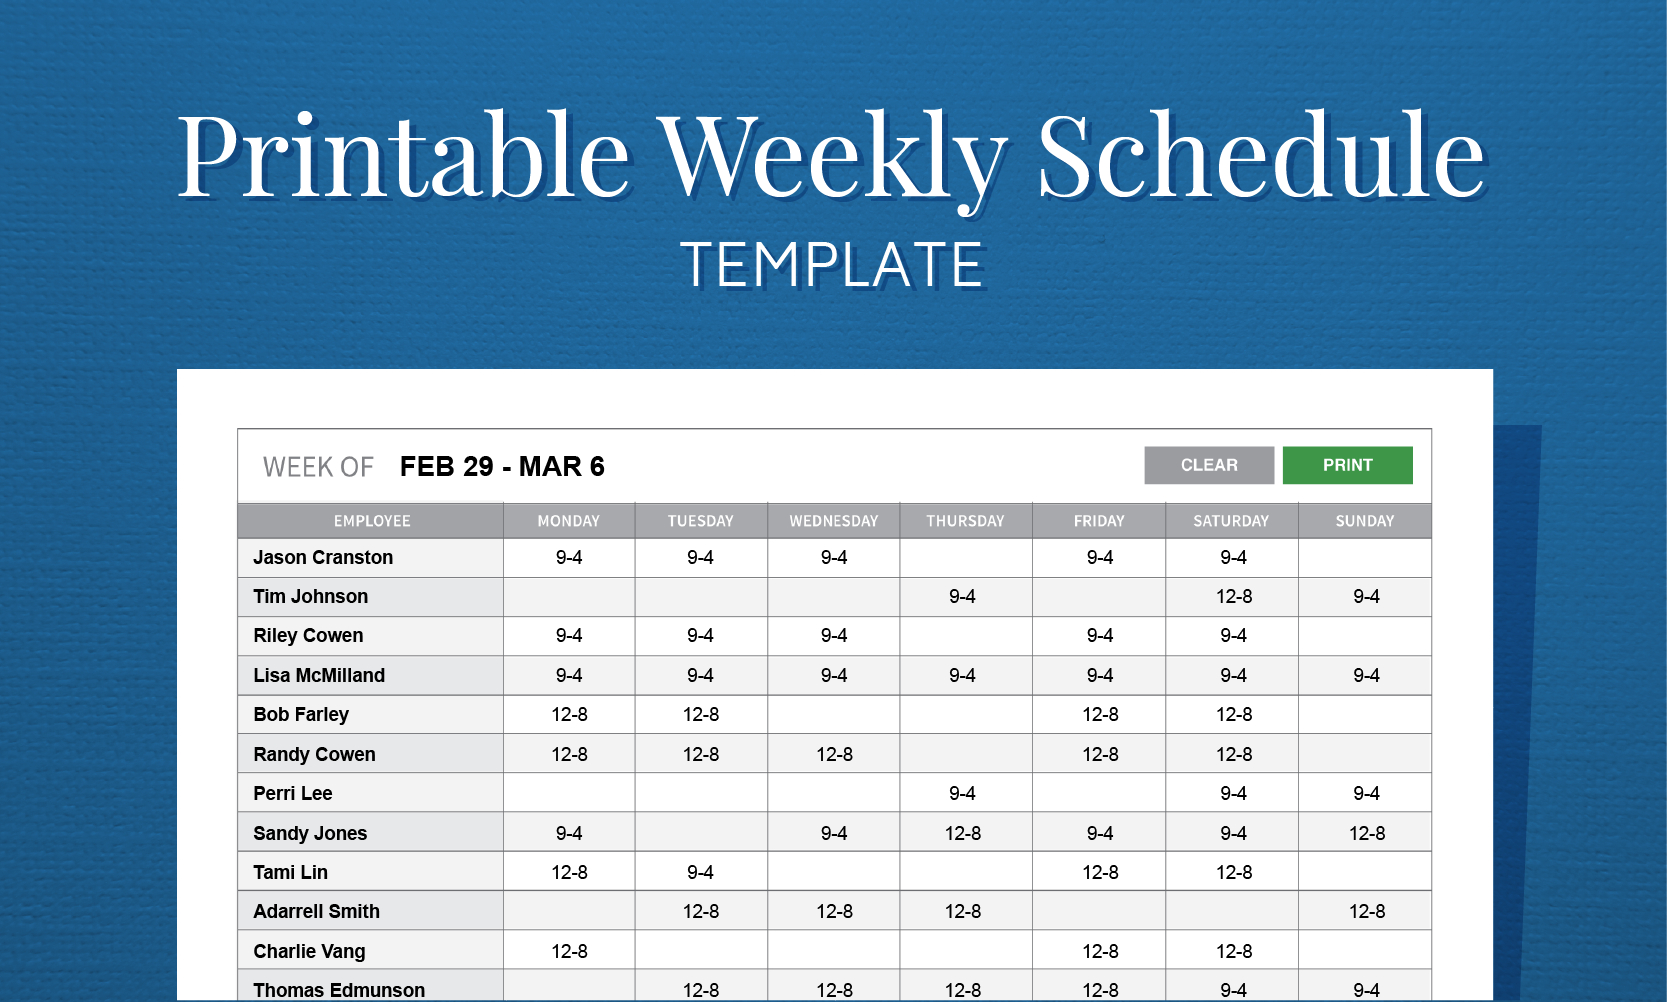 Free Printable Weekly Work Schedule Template For Employee Scheduling With Employee Weekly Schedule Template